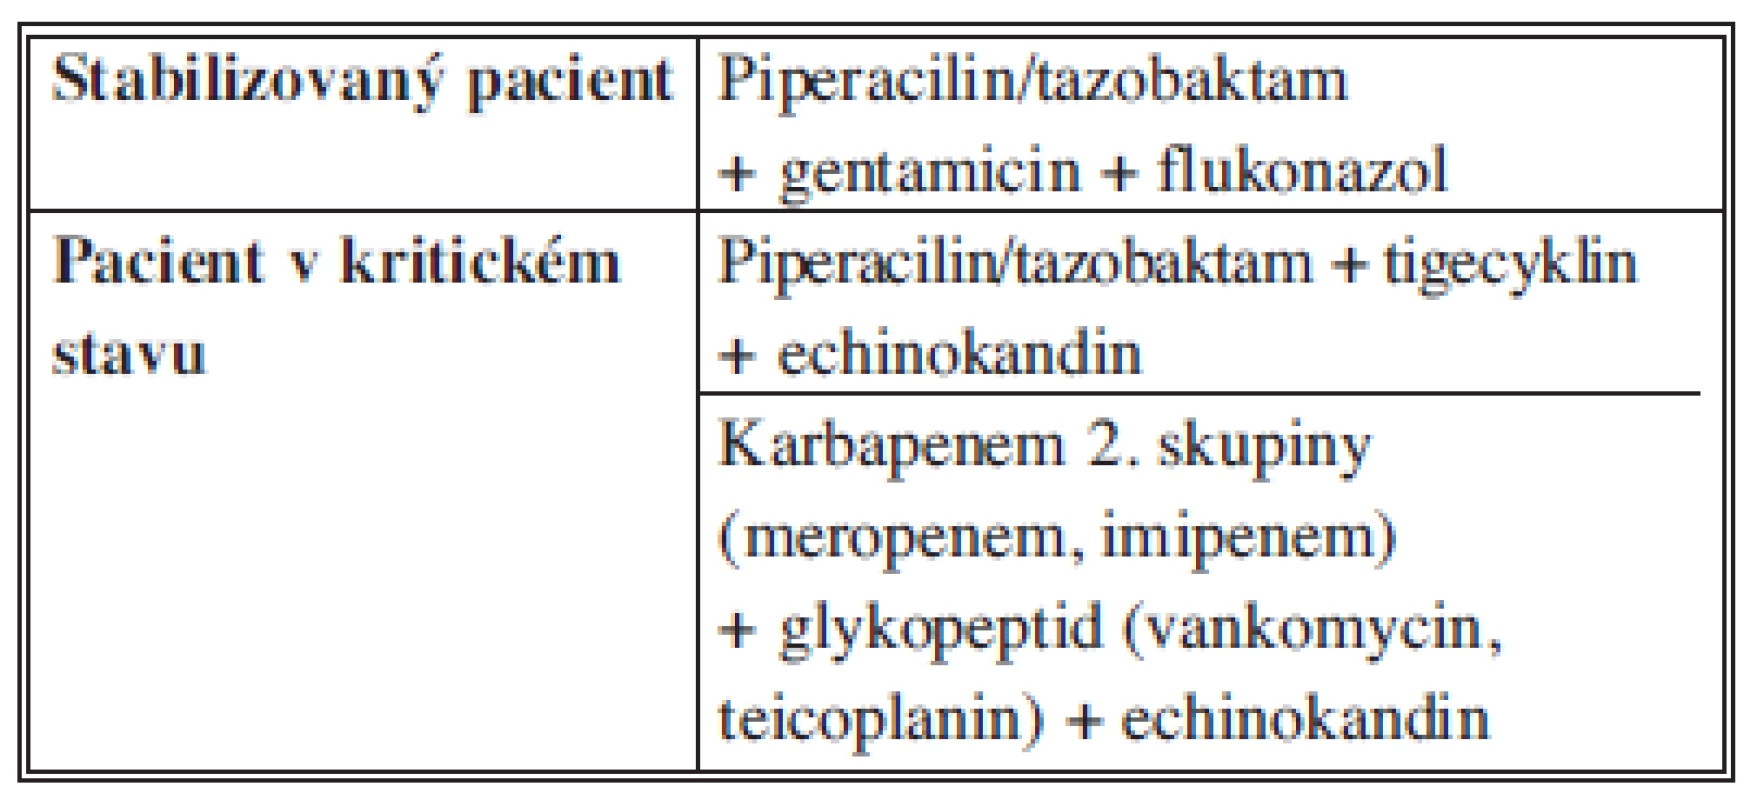 Doporučení pro empirickou terapii nozokomiální SP
Tab. 9: Recommendations for antimicrobial therapy for for hospital-acquired IAI